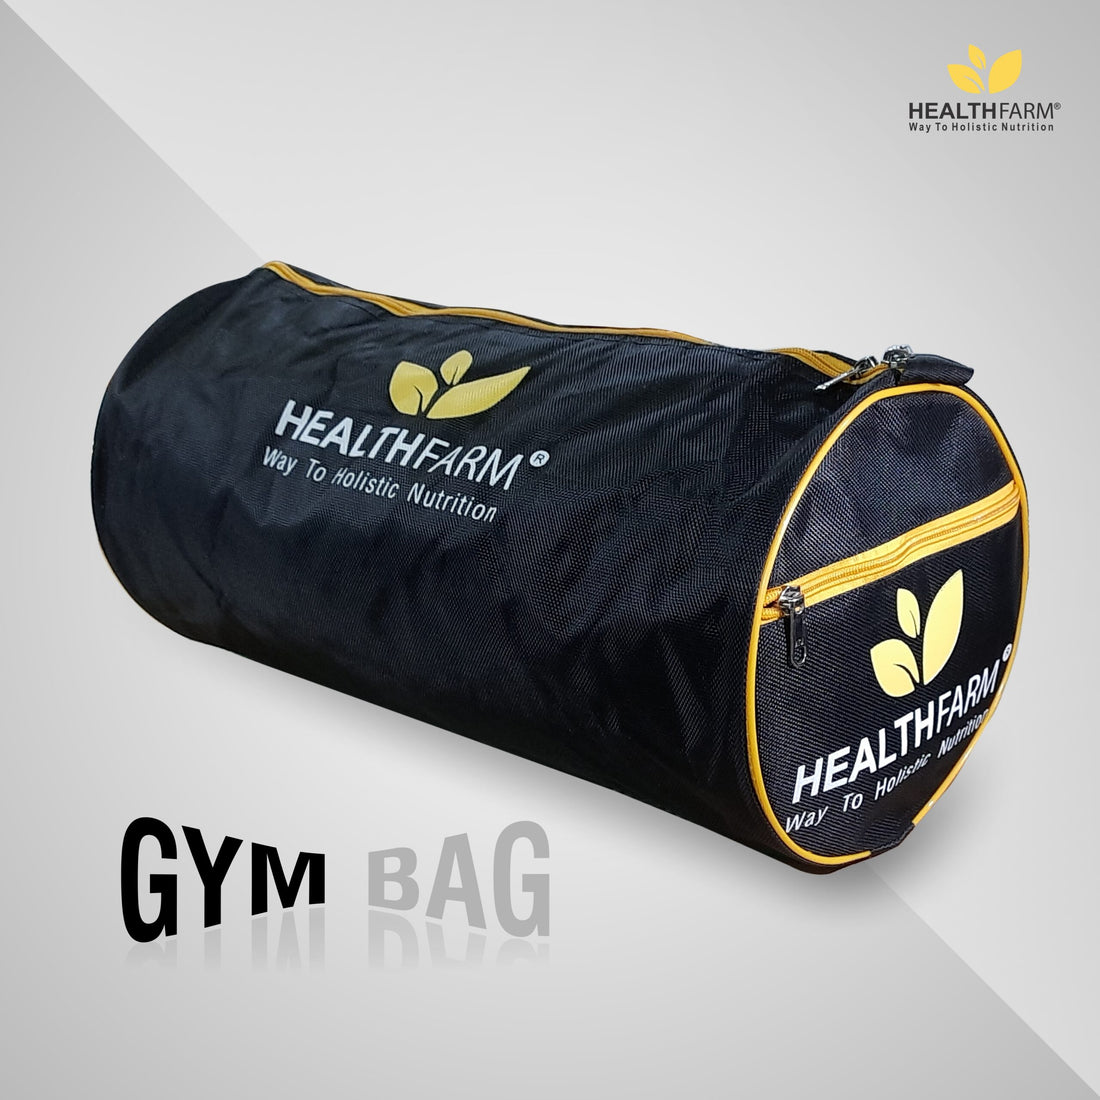 HealthFarm Gym BAG - Healthfarm Nutrition